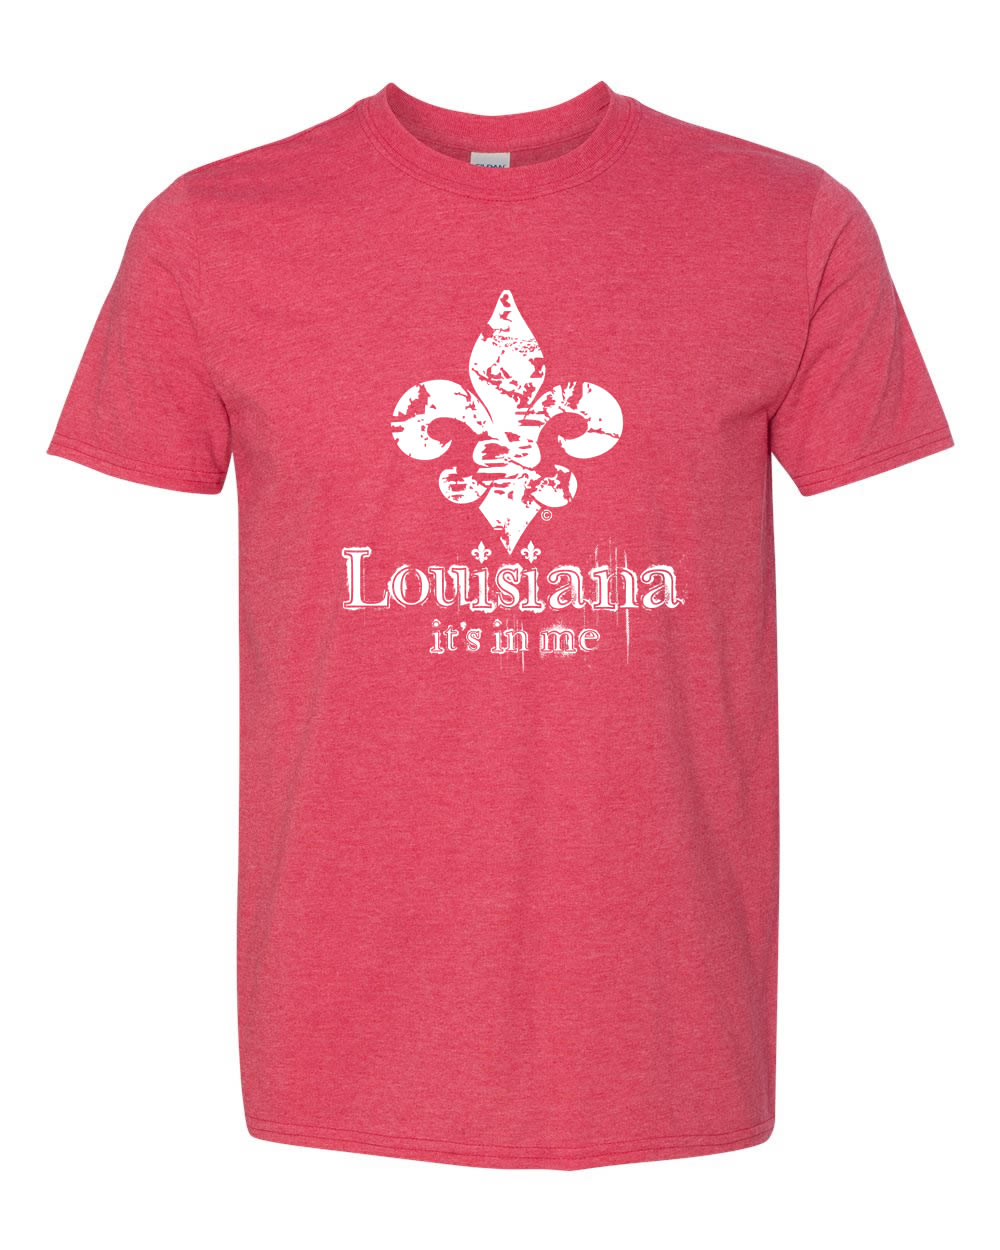 Red: Louisiana It's In Me